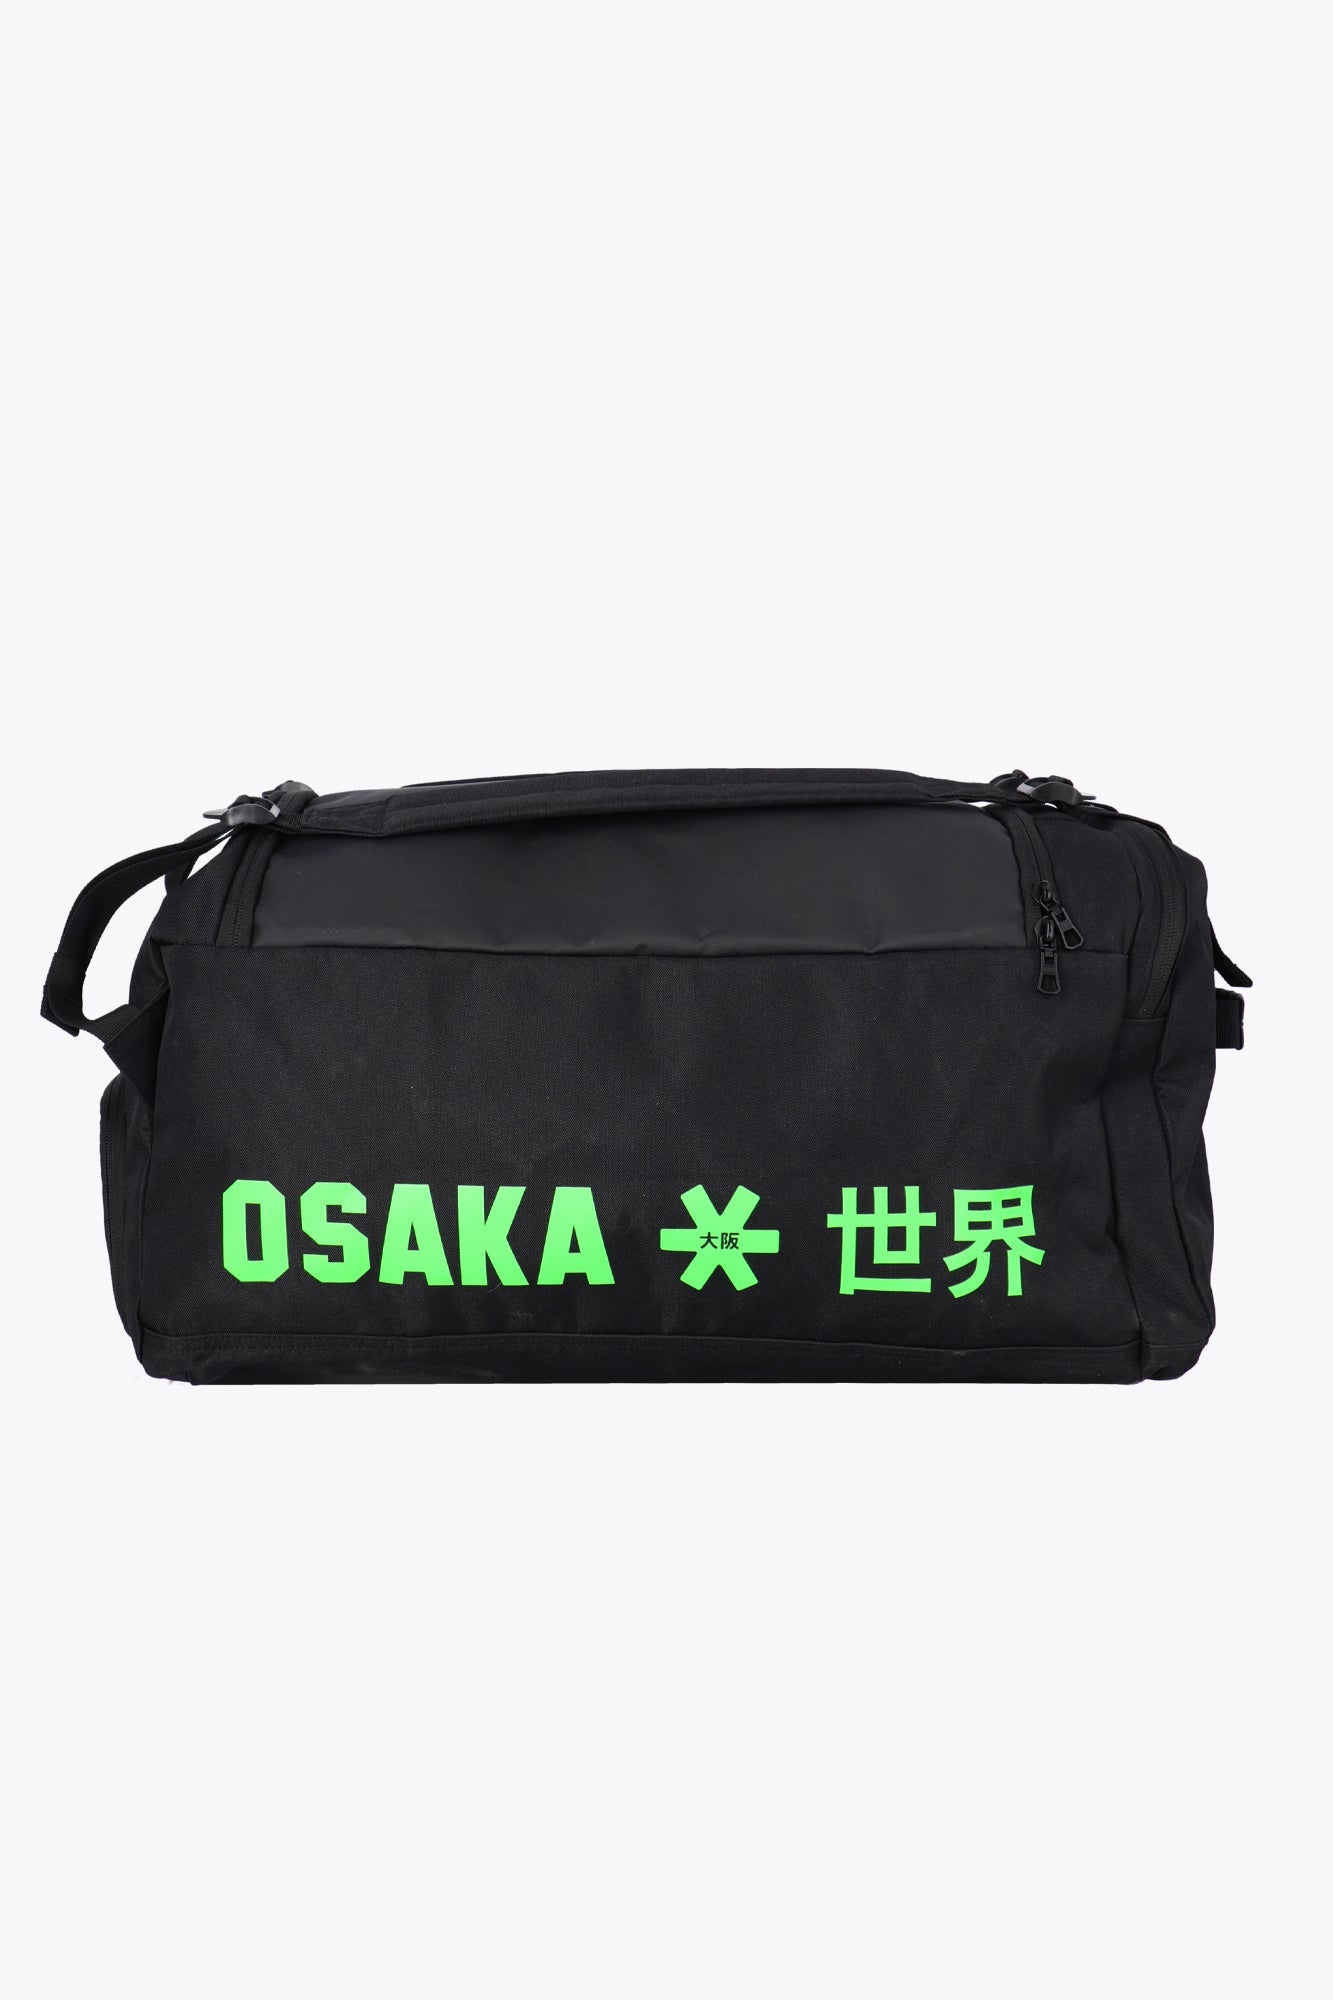 Se Osaka Sports Duffle Bag (sort/grøn) hos Padellife